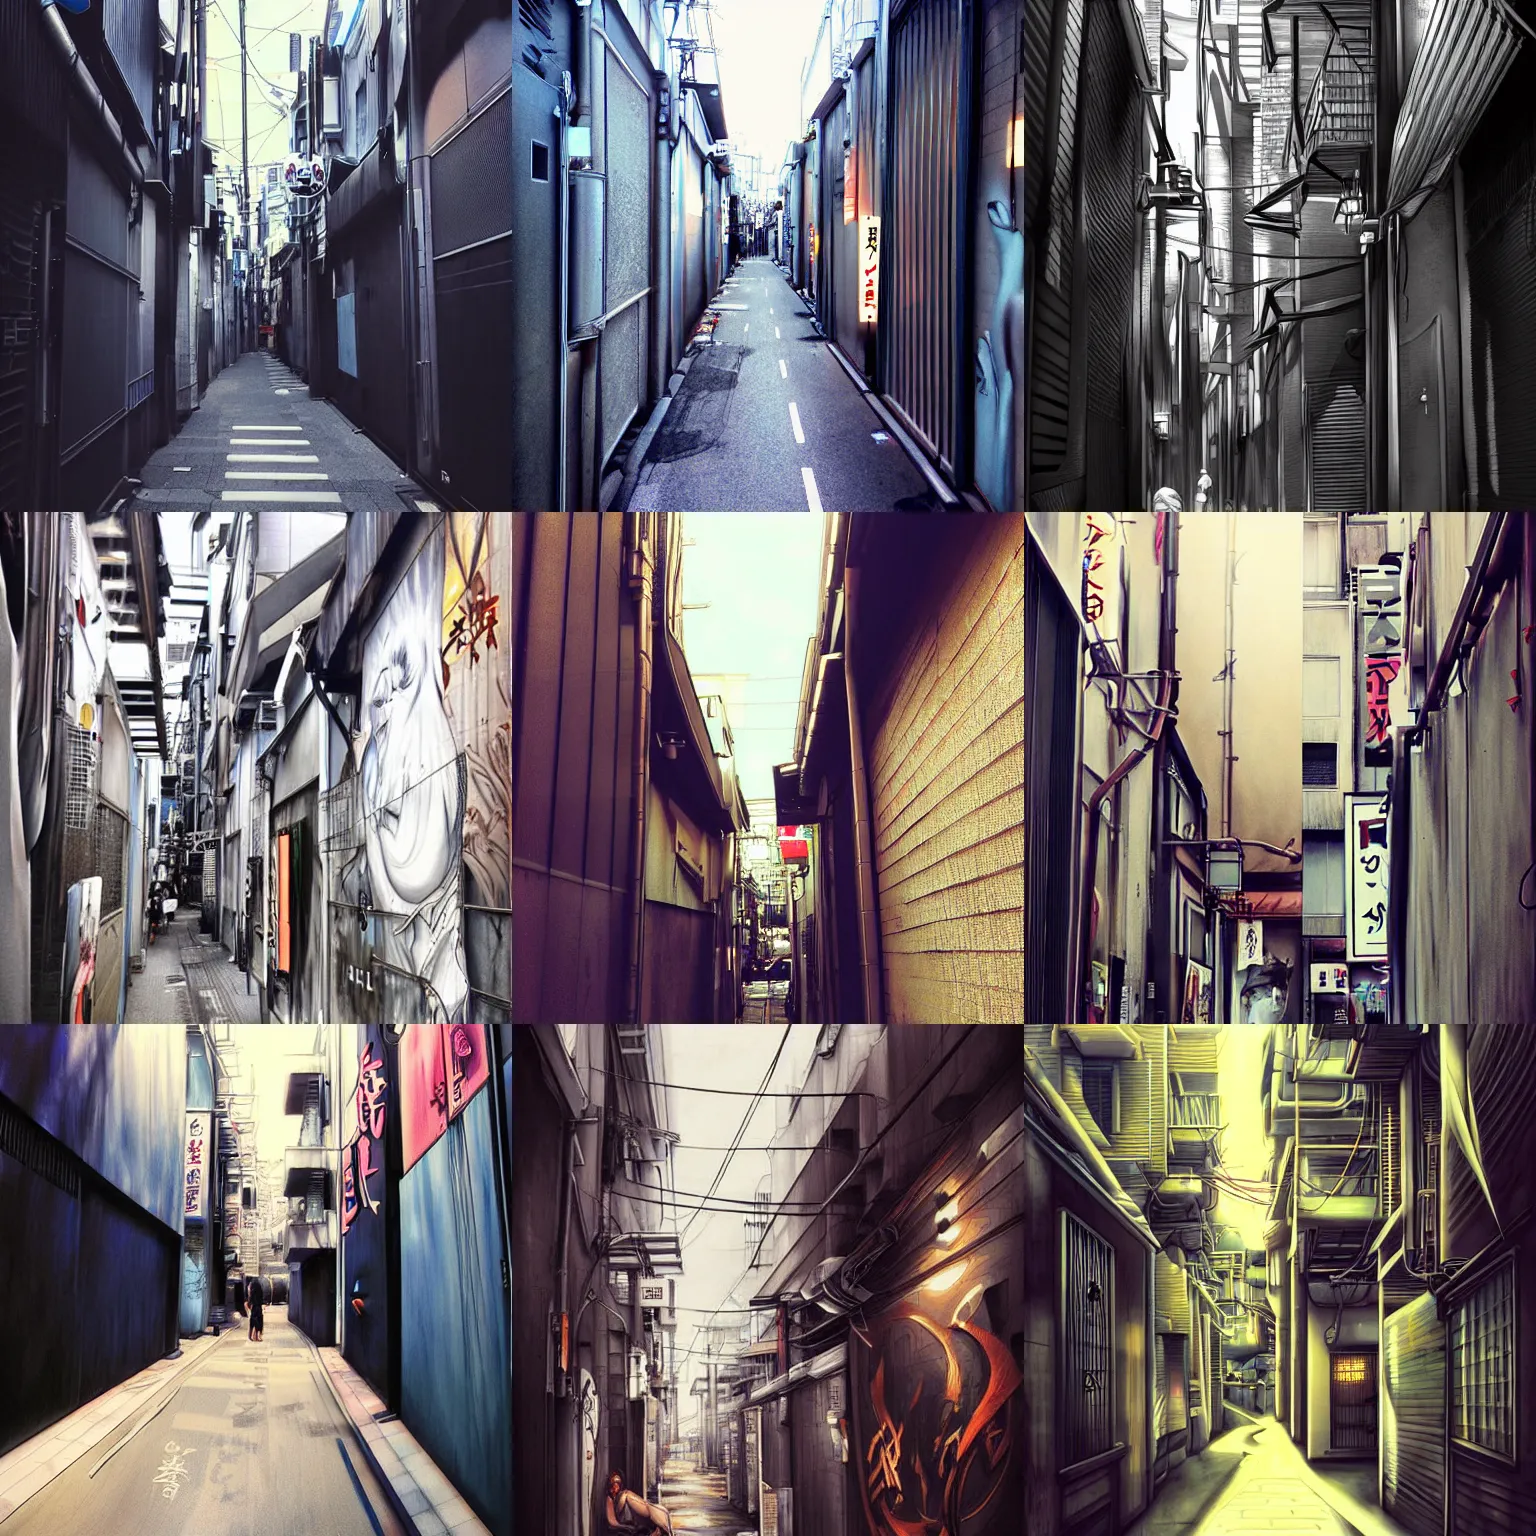 Prompt: tokyo alleyway by artgerm, beautiful